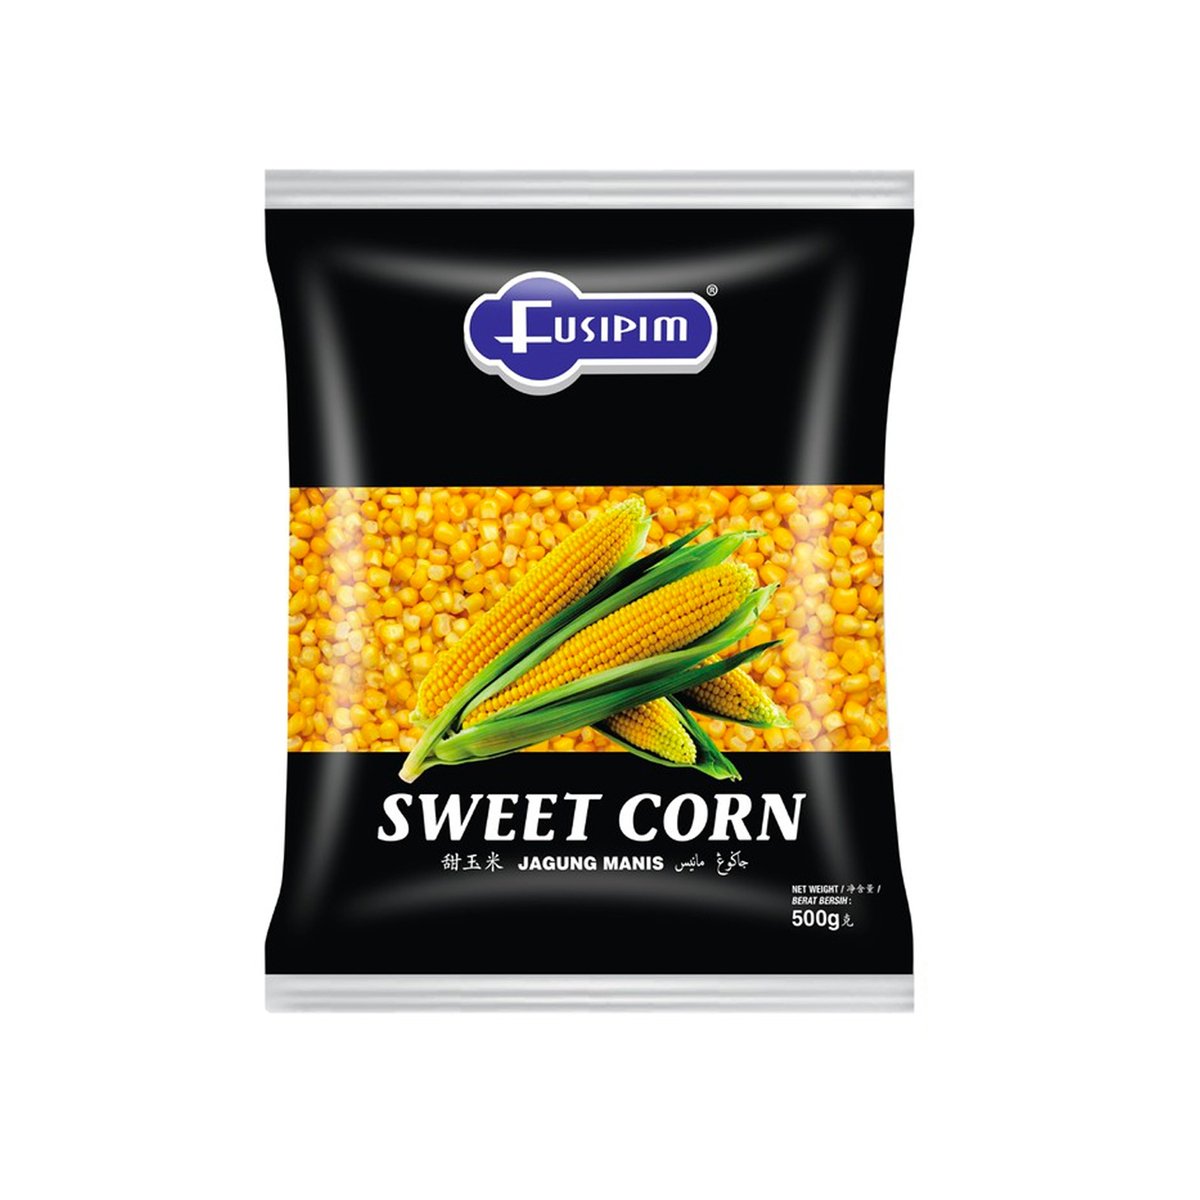 Fusipim Sweet Corn 500g